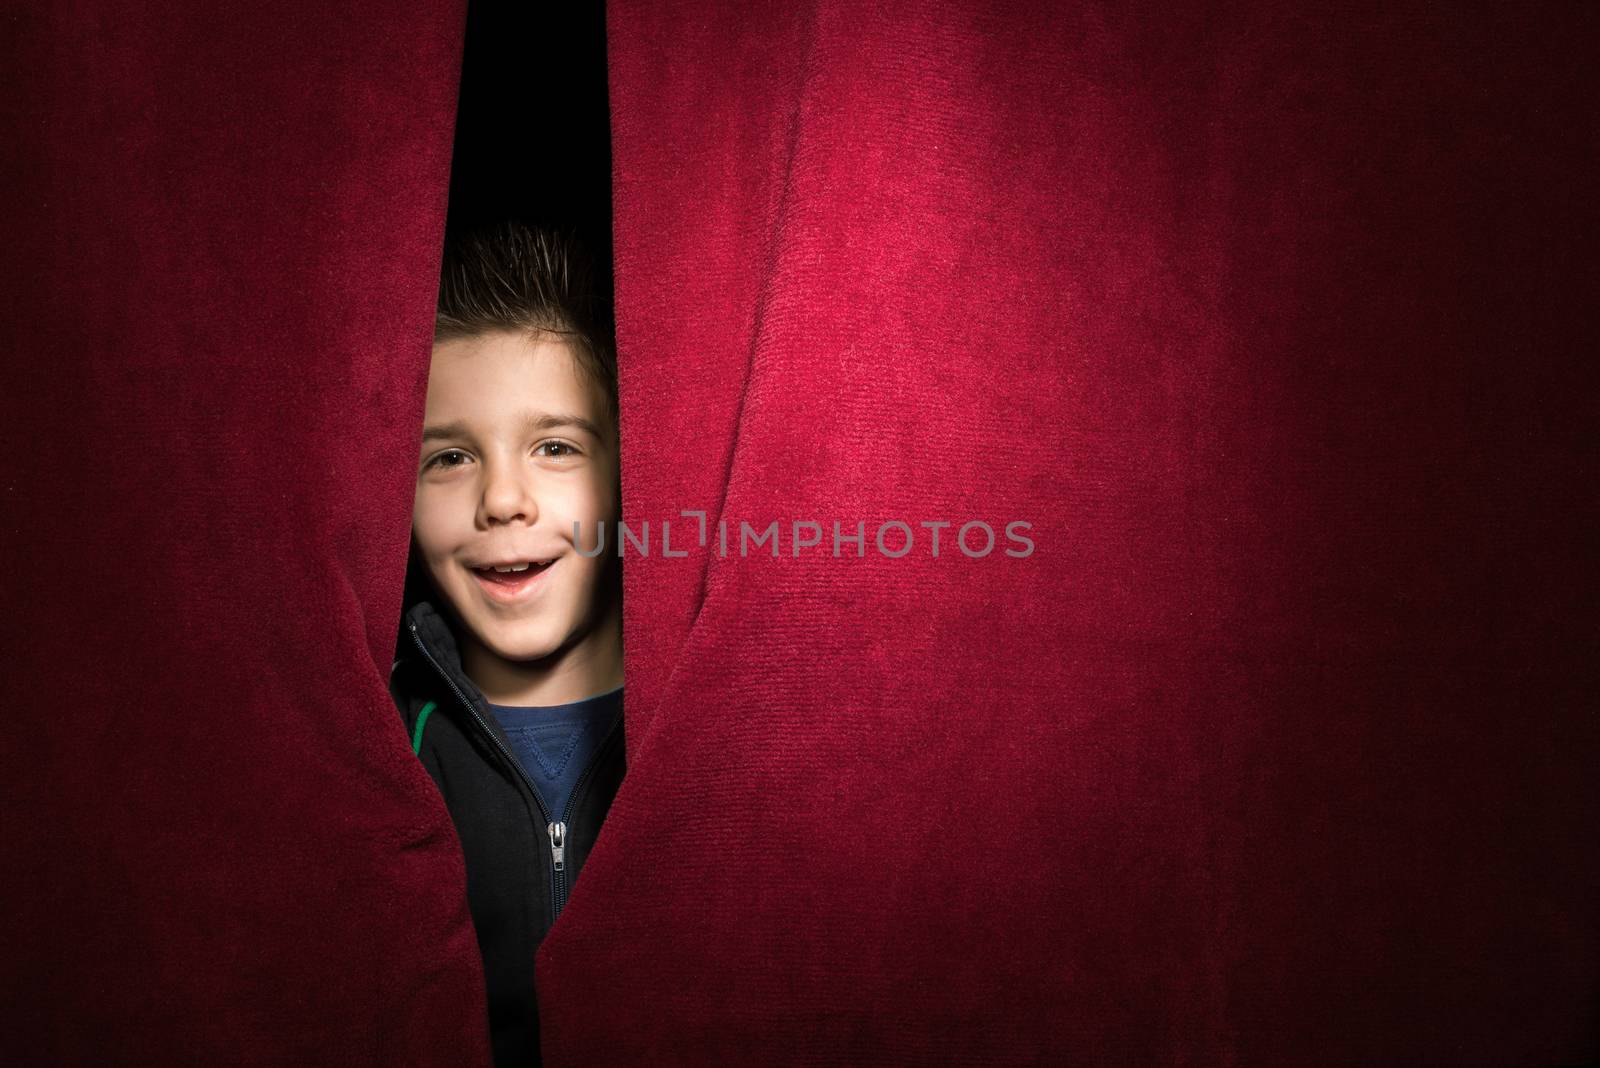 Child appearing beneath the curtain by deyan_georgiev